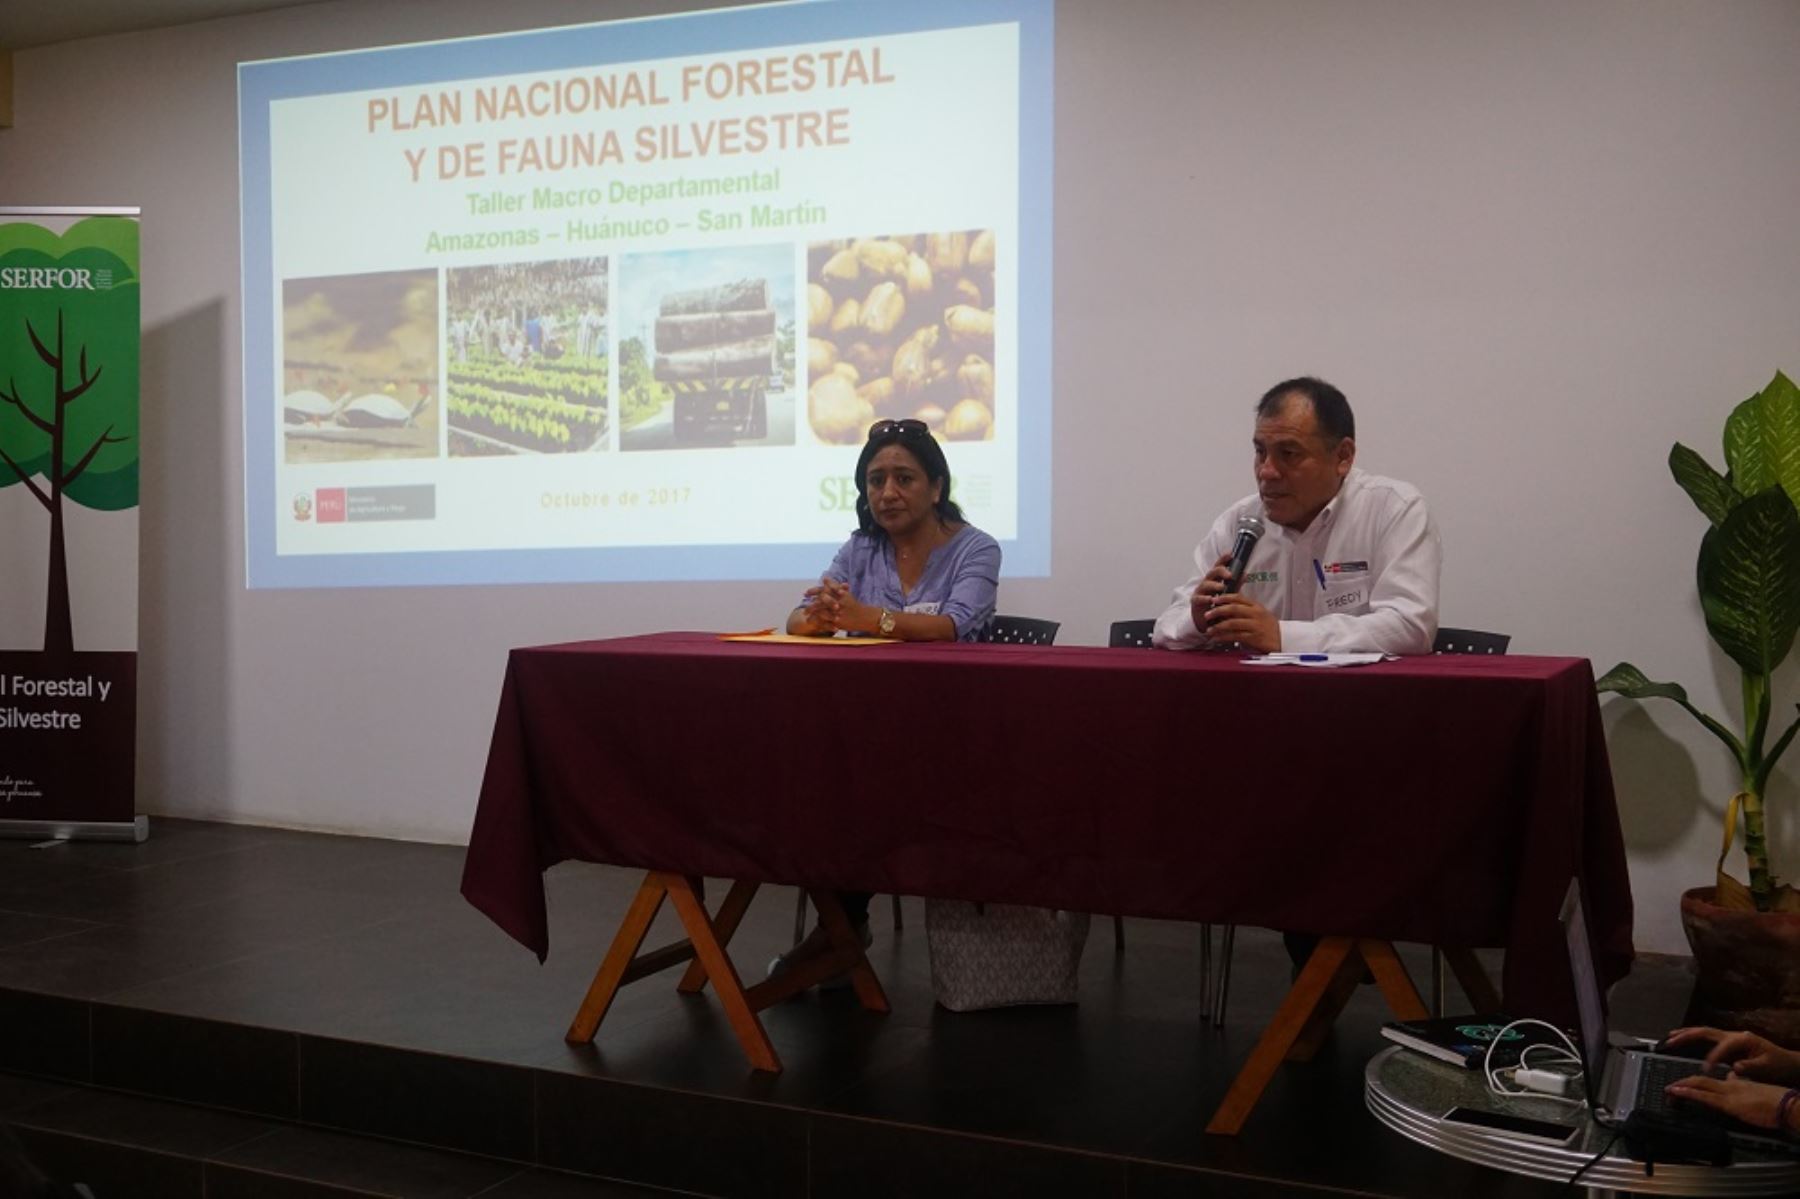 Taller Macro Departamental organizado por Serfor para elaborar Plan Nacional Forestal y de Fauna Silvestre.